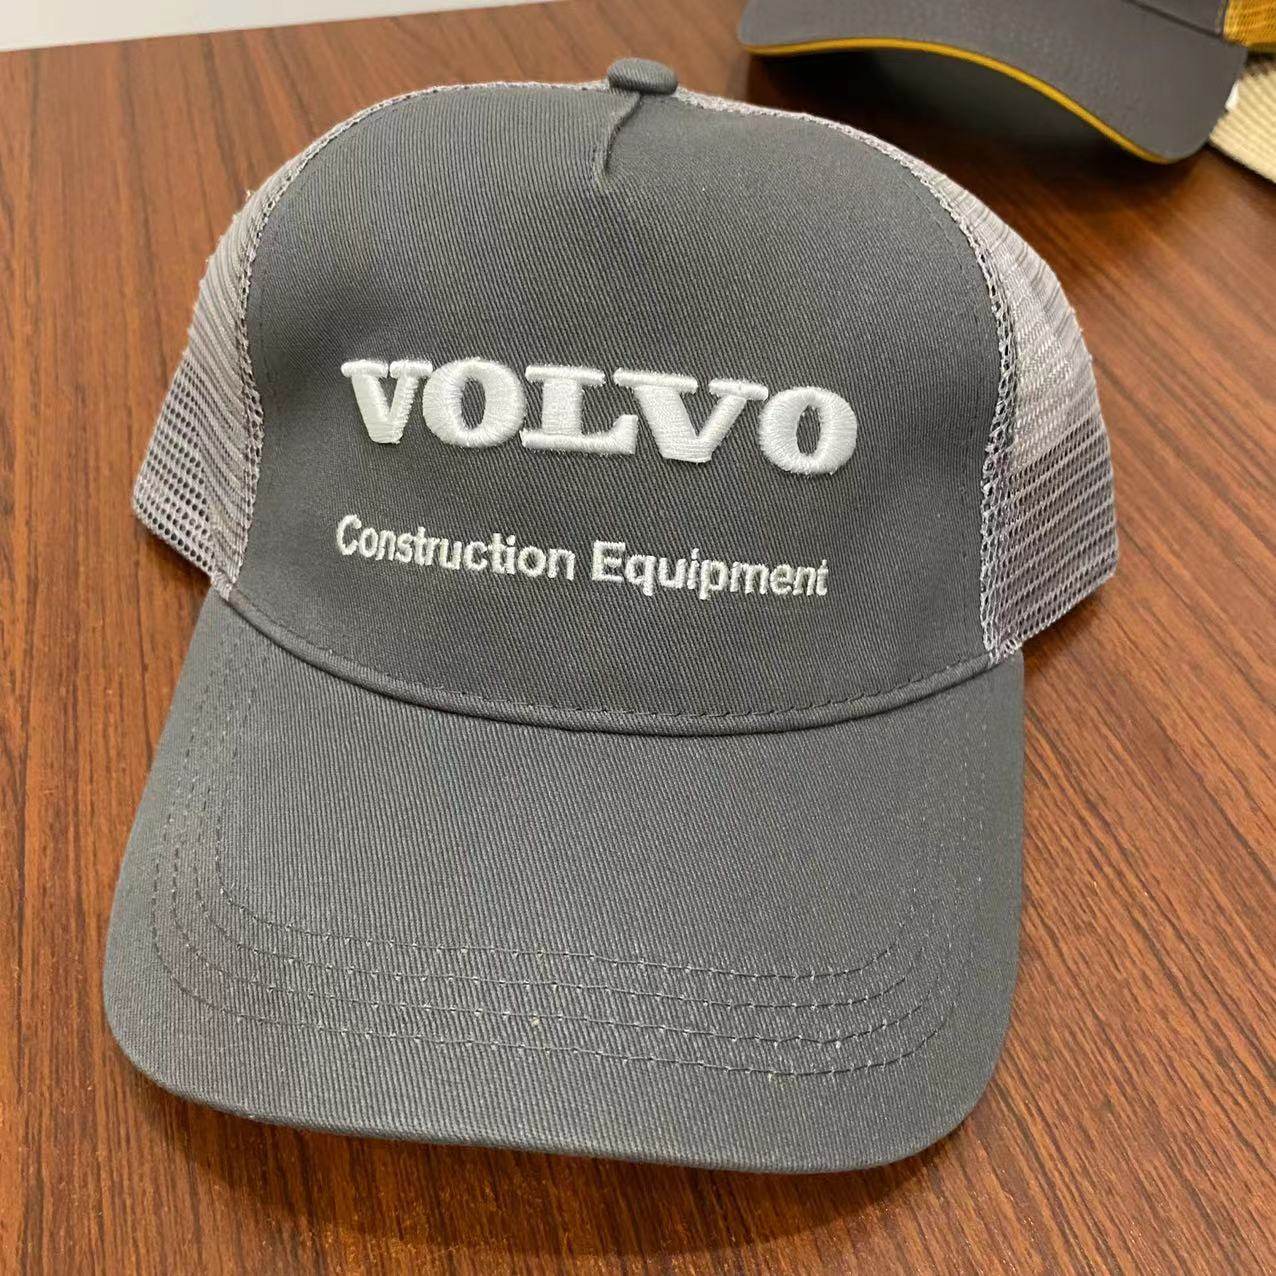 Construction Equipment VOLVO men trucker hat gray